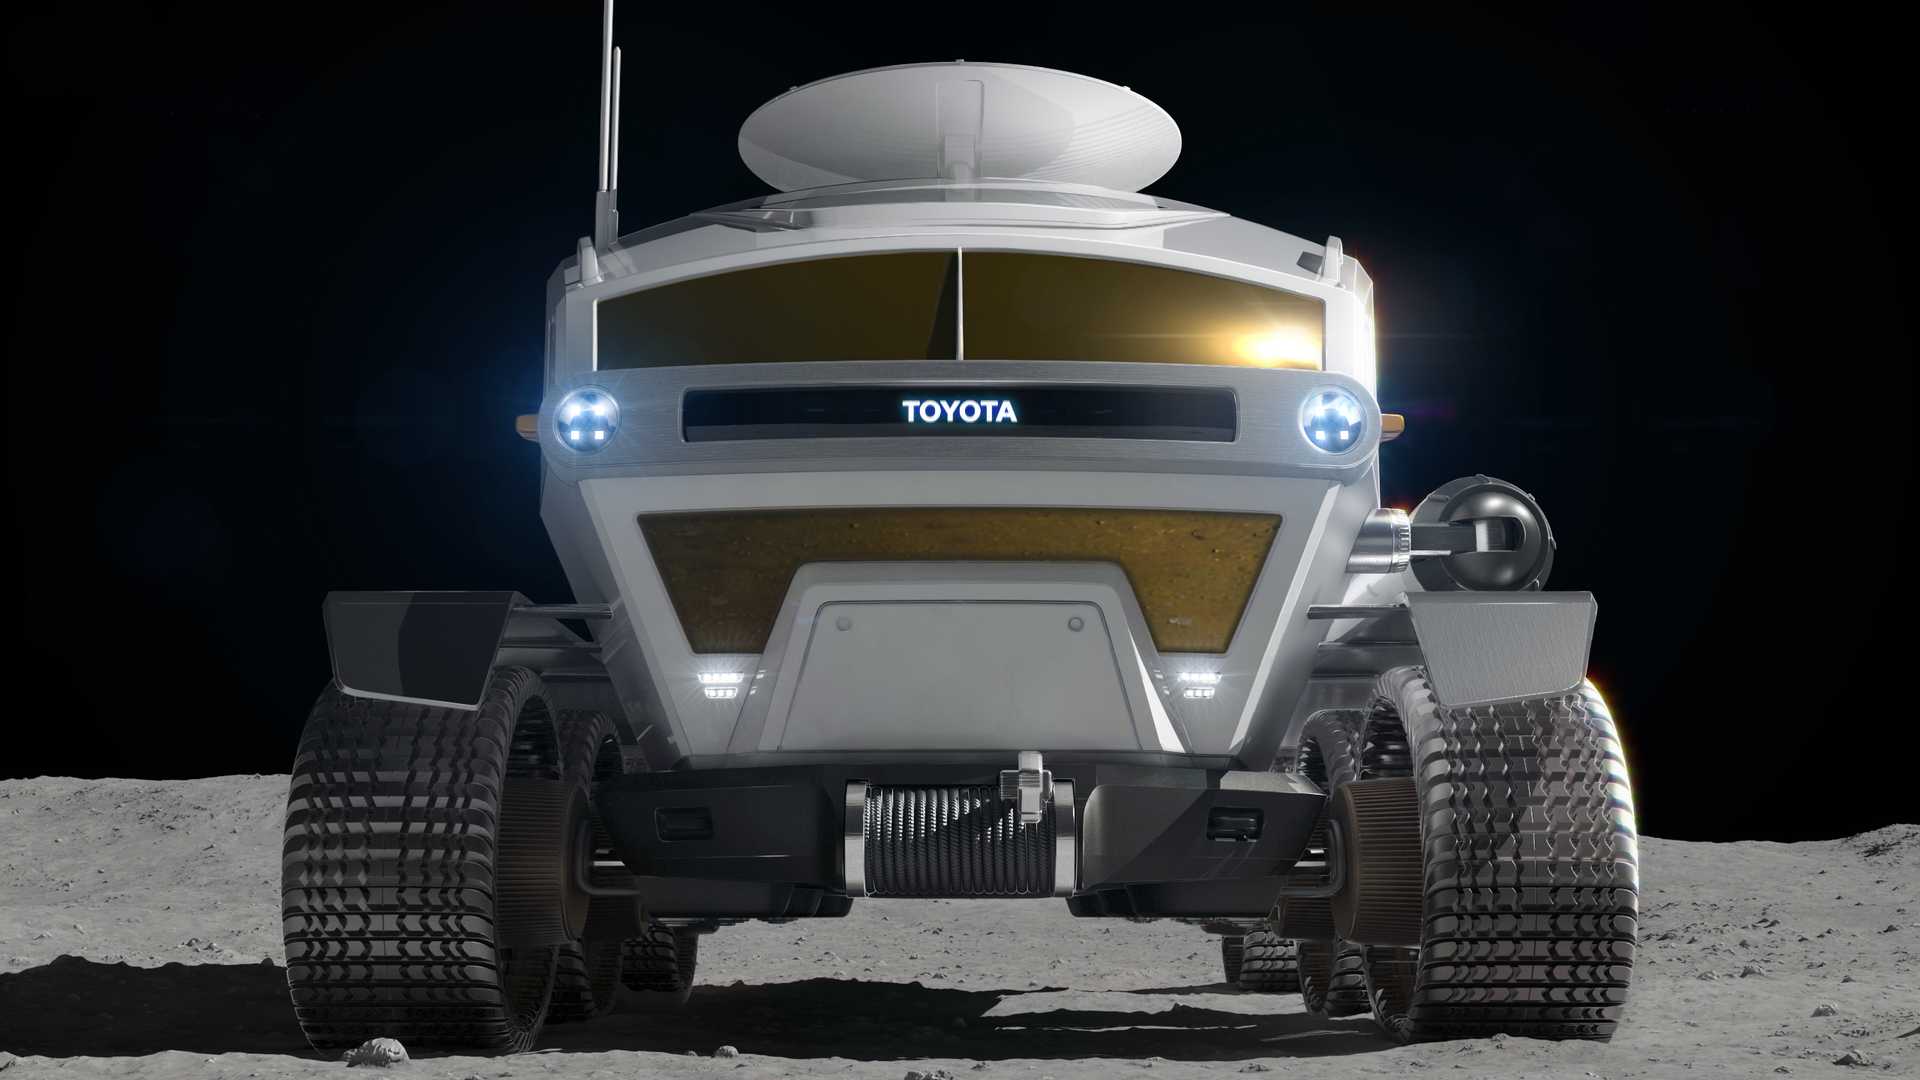 toyota-lunar-rover-concept-art-6.jpg